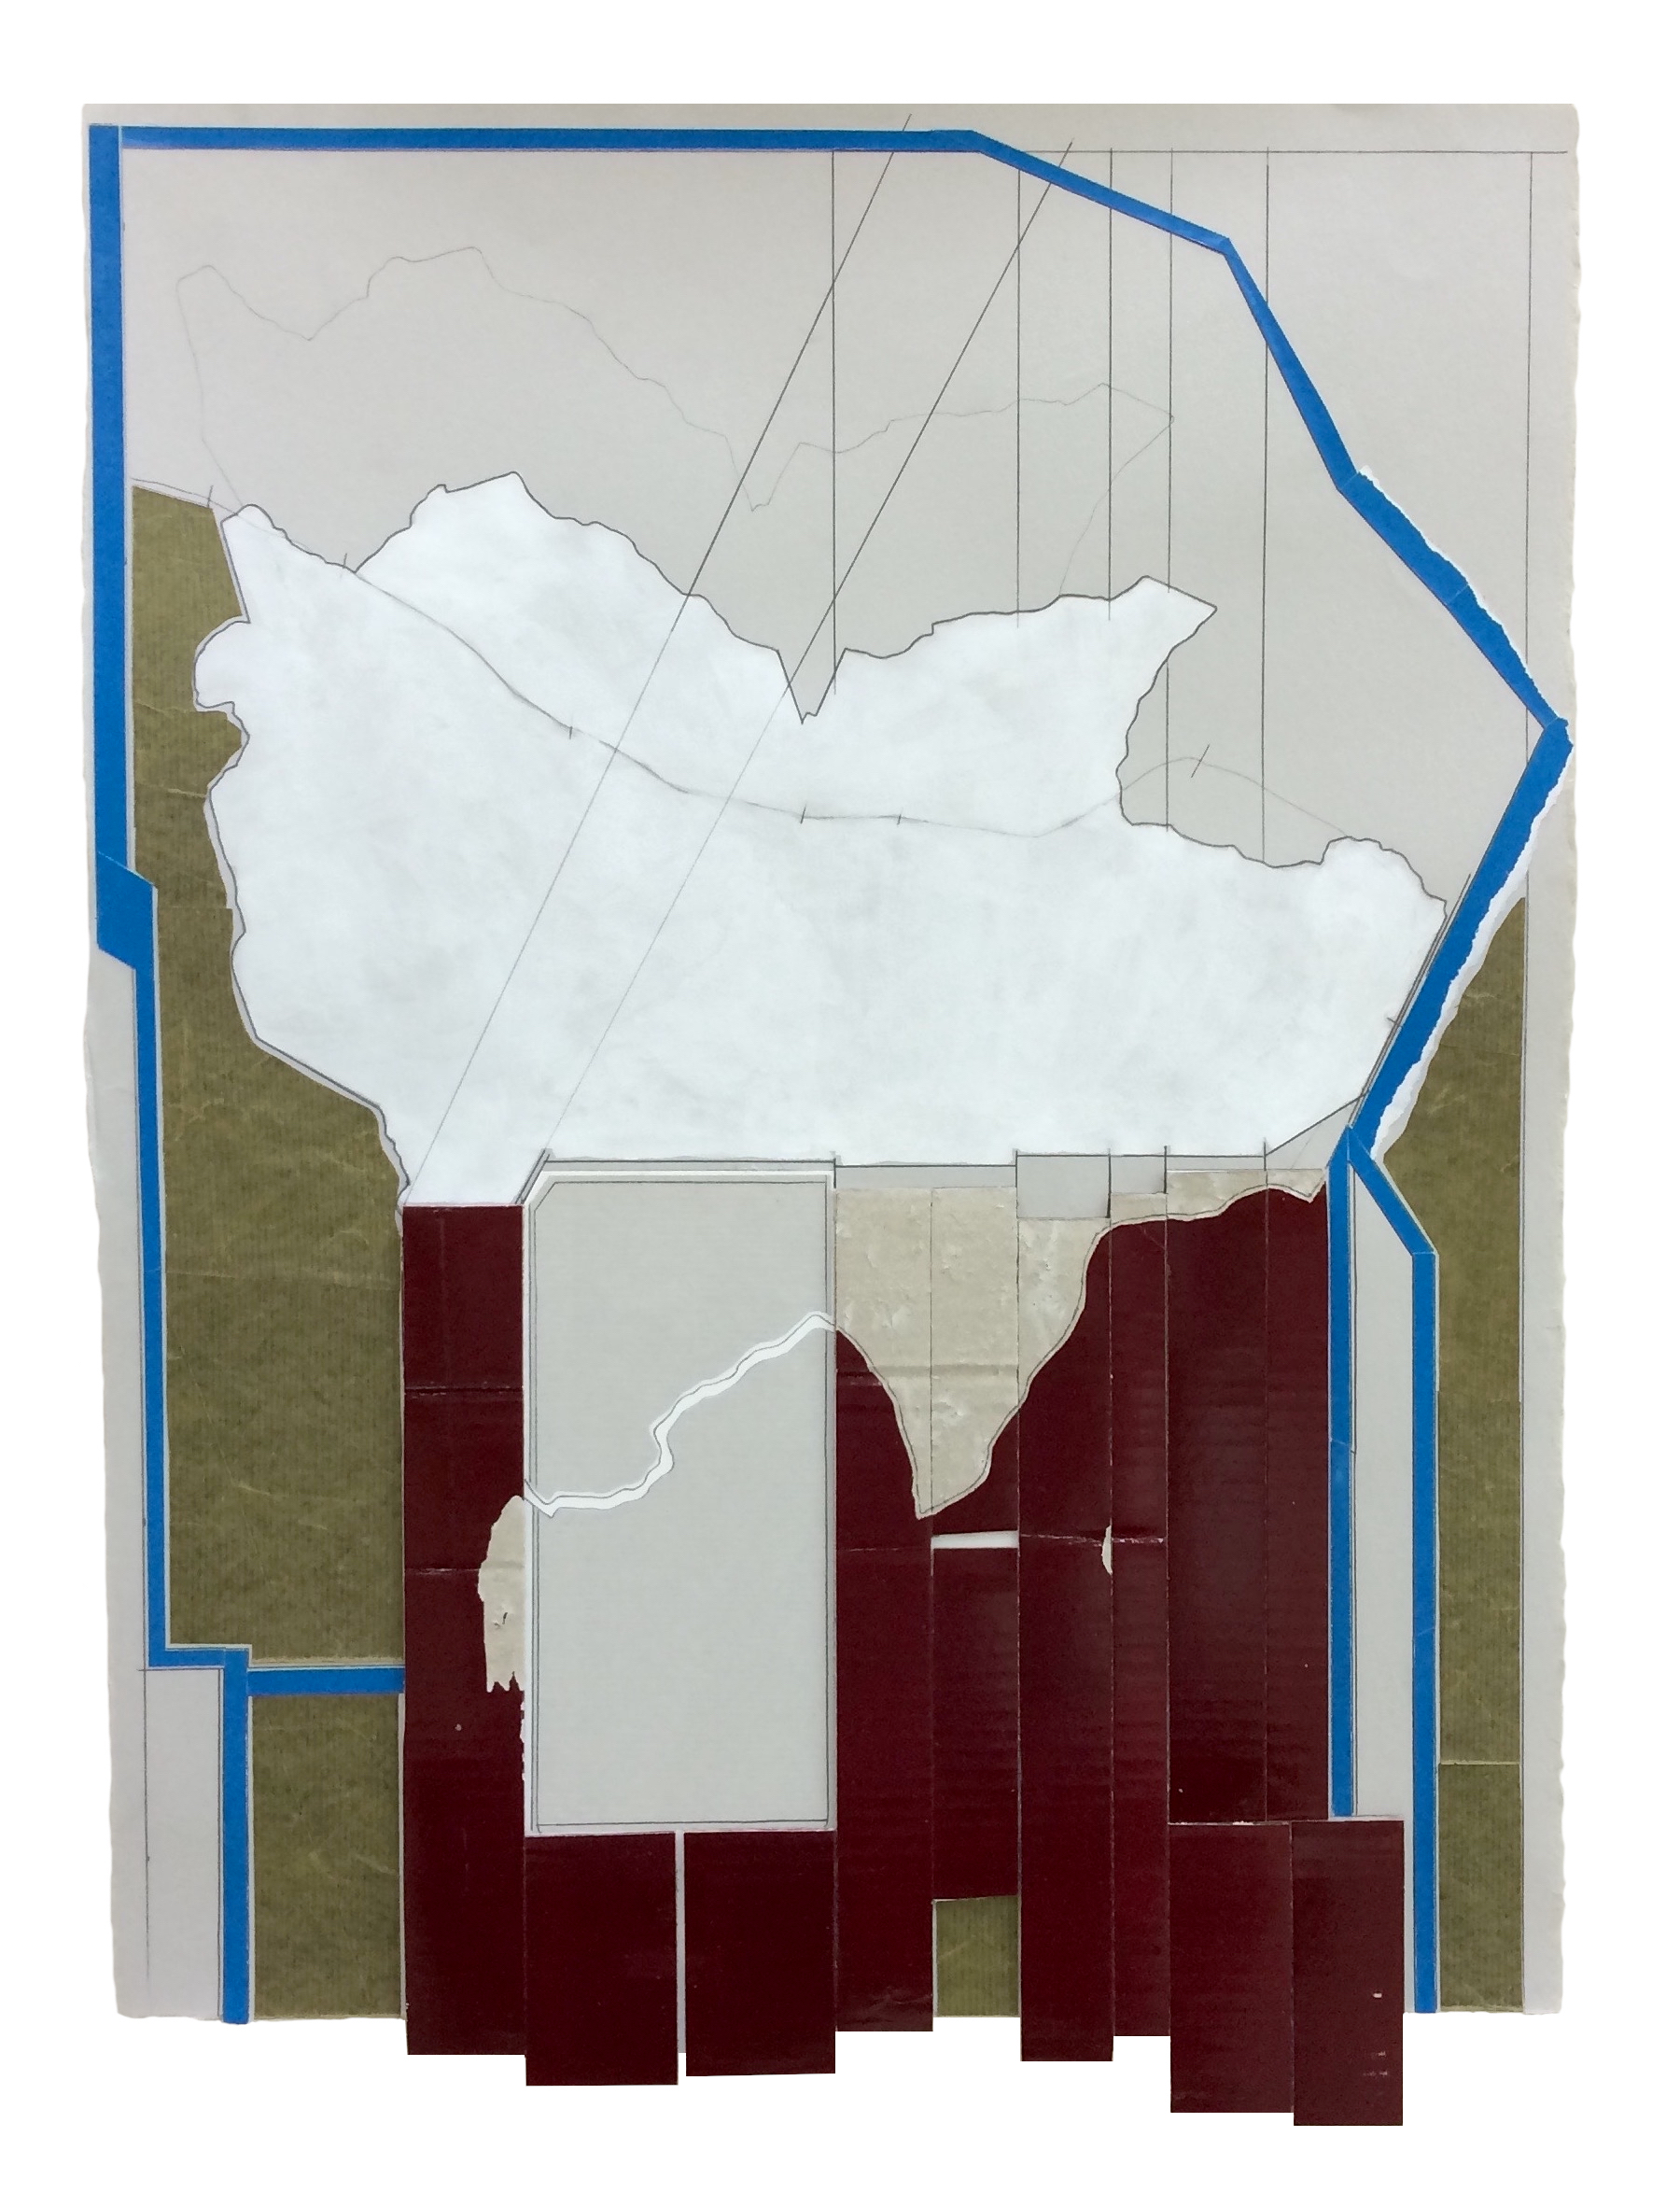    Perimeter  , 2016  Collage, gouache, pencil on paper  26 3/4 x 19 1/4 inches    